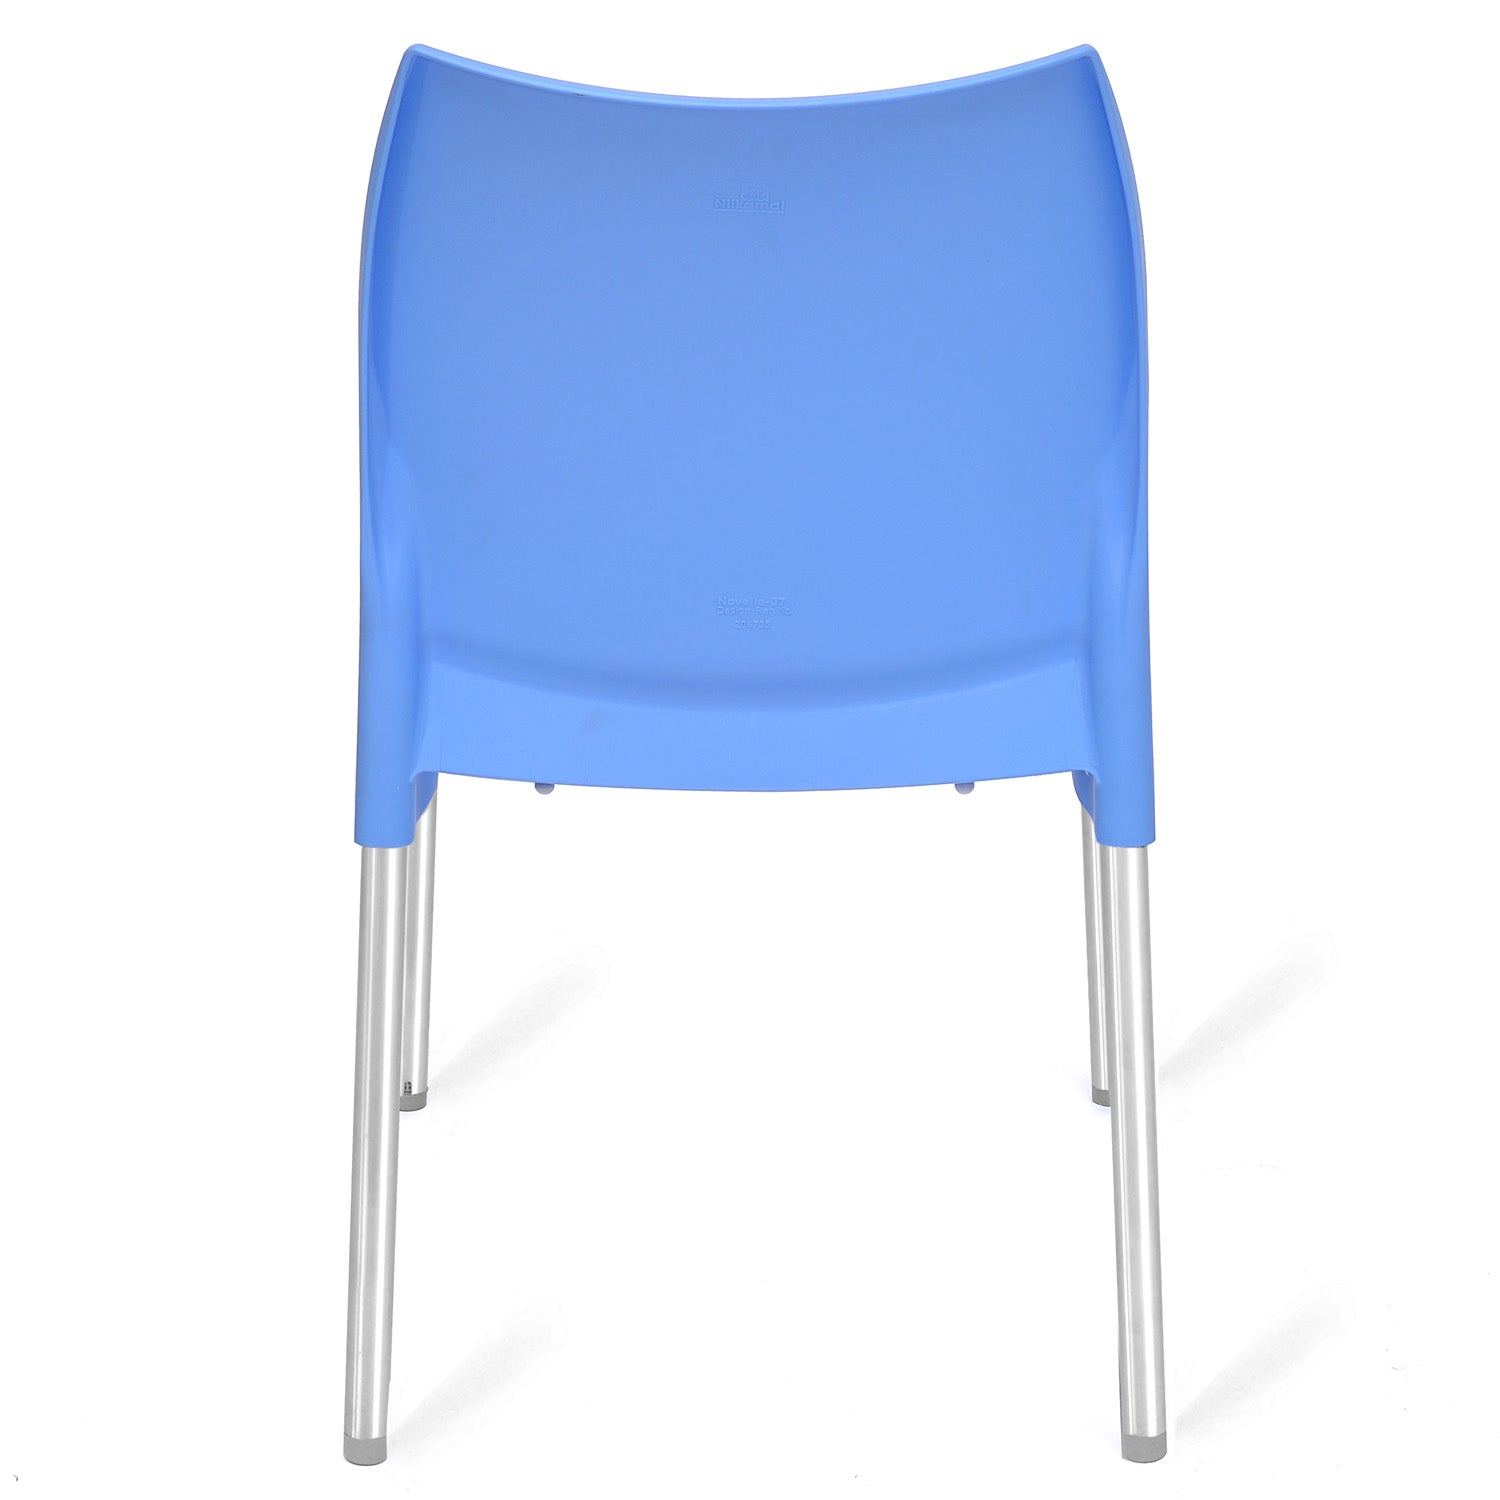 Nilkamal Novella 07 Chair (Blue)